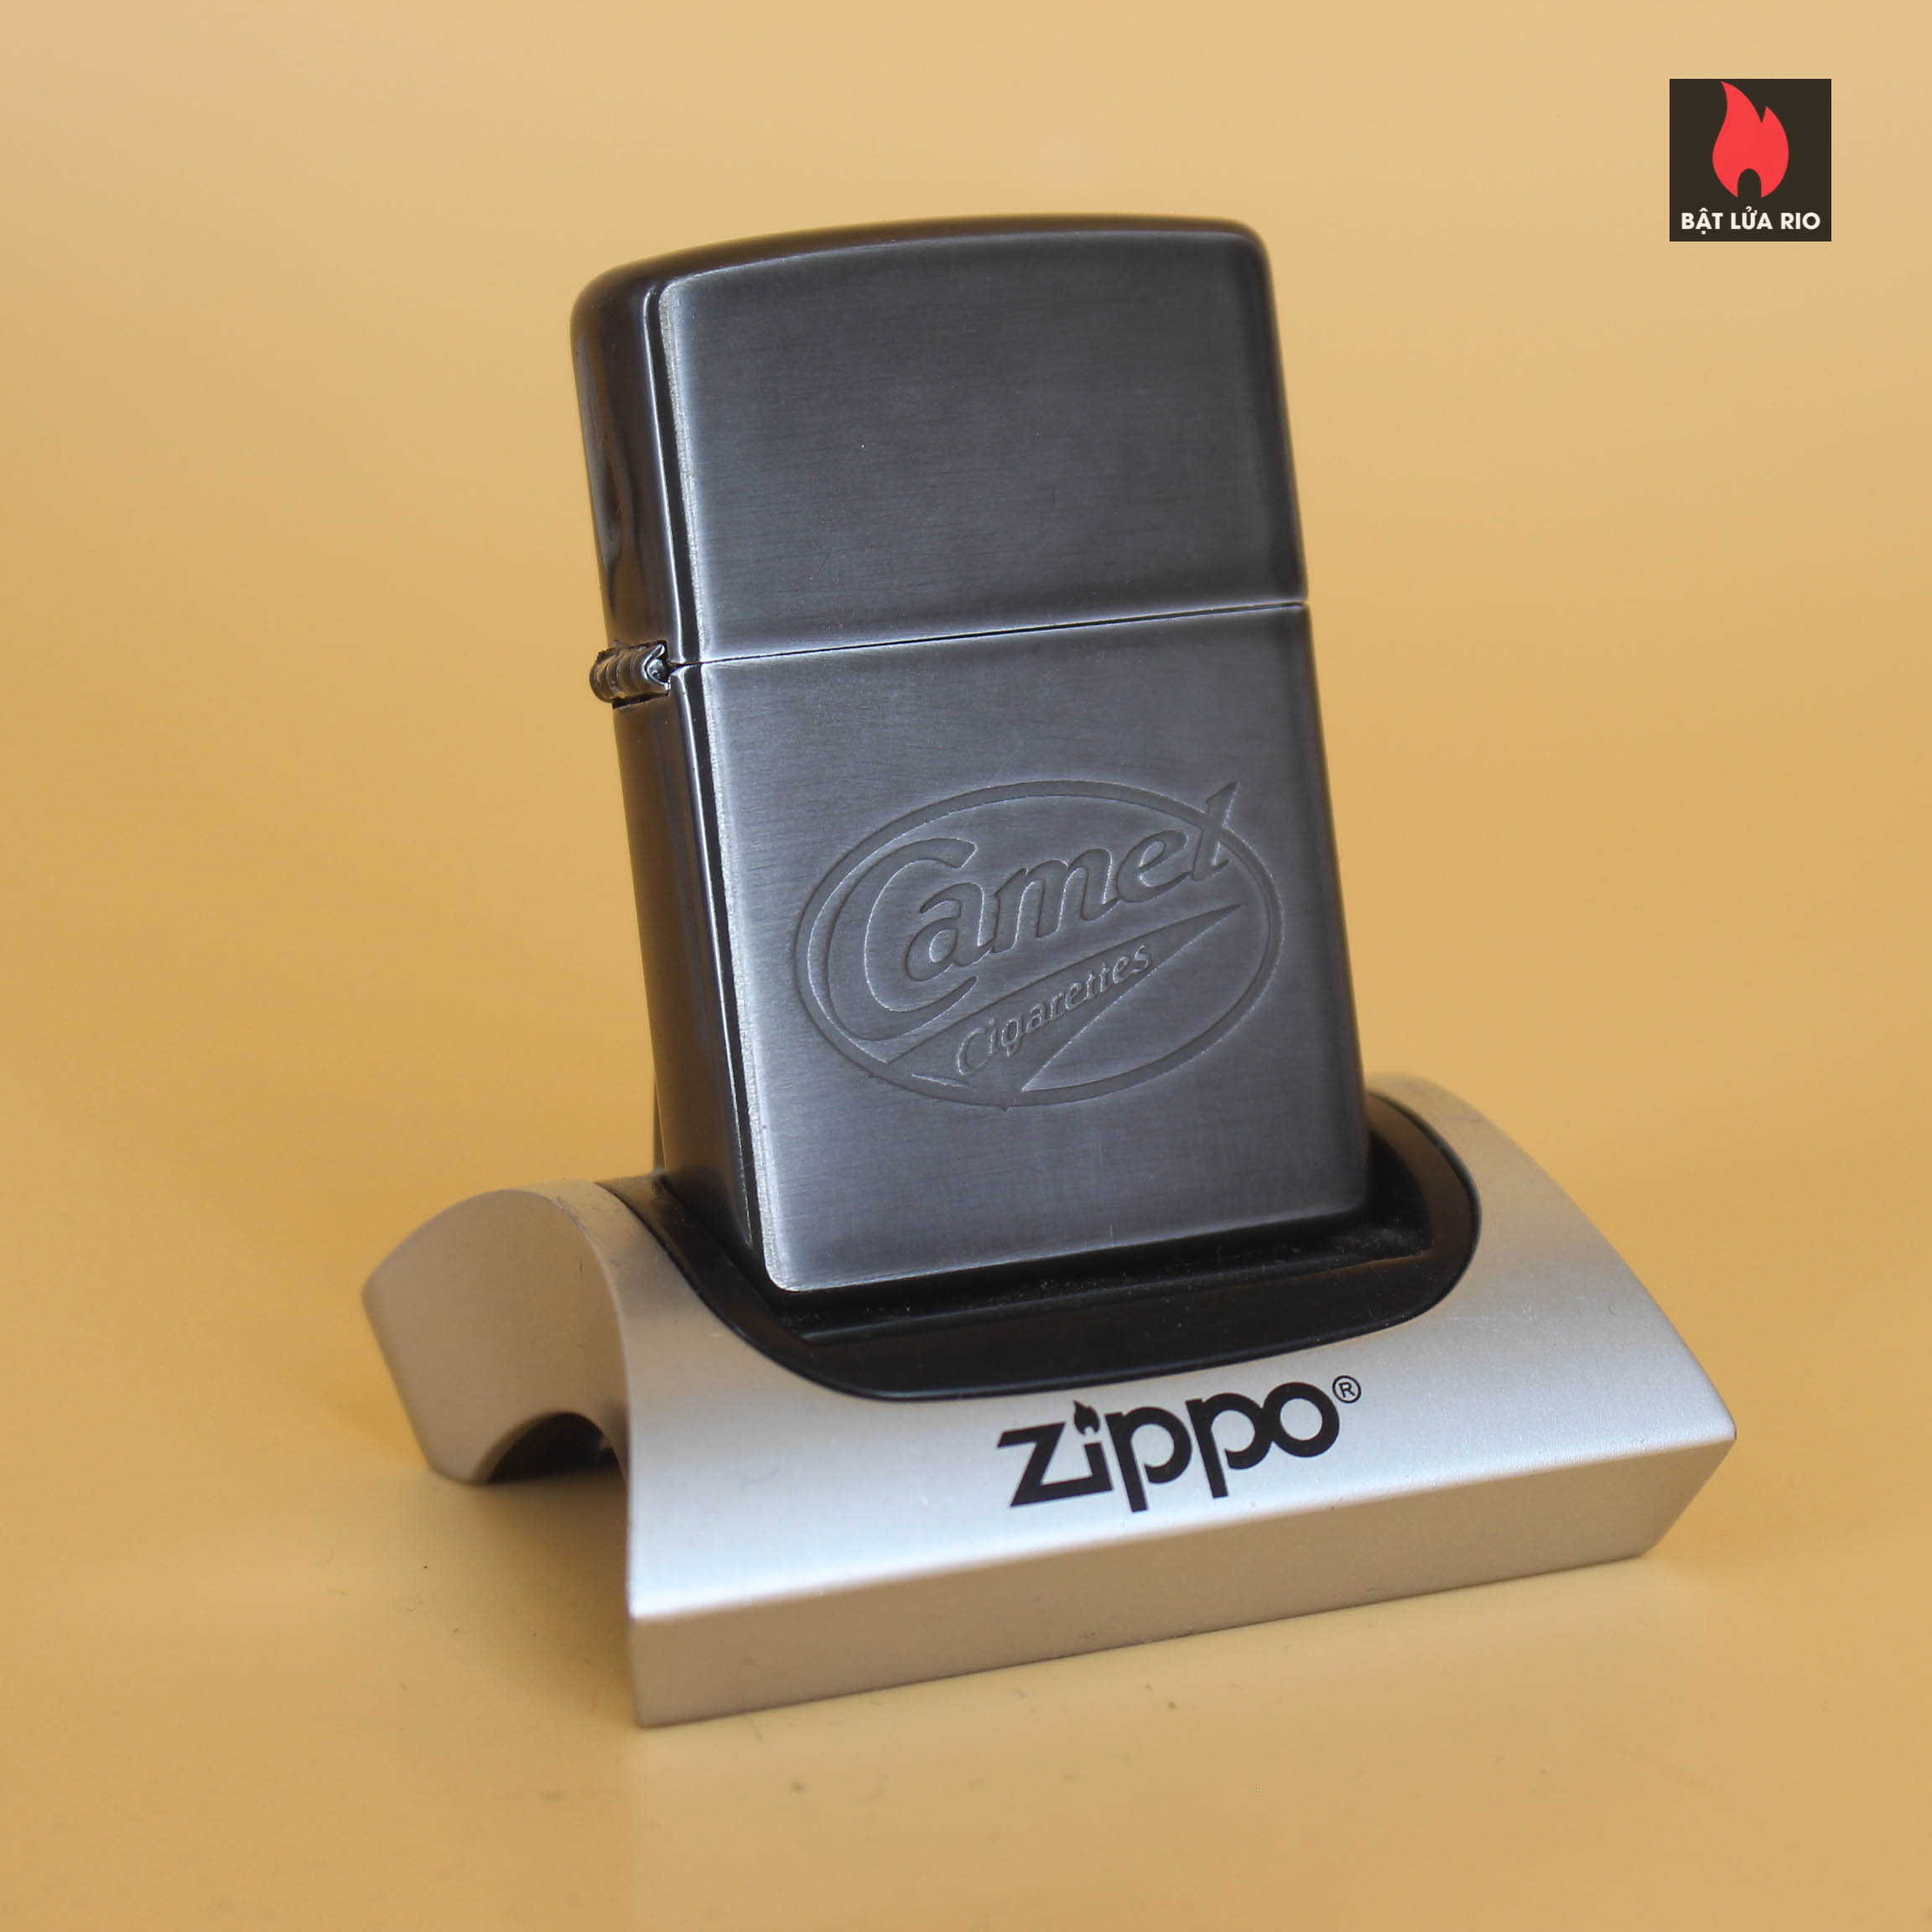 Zippo La Mã 1997 – Zippo Table Set – Camel Barbara Table Lighter 16